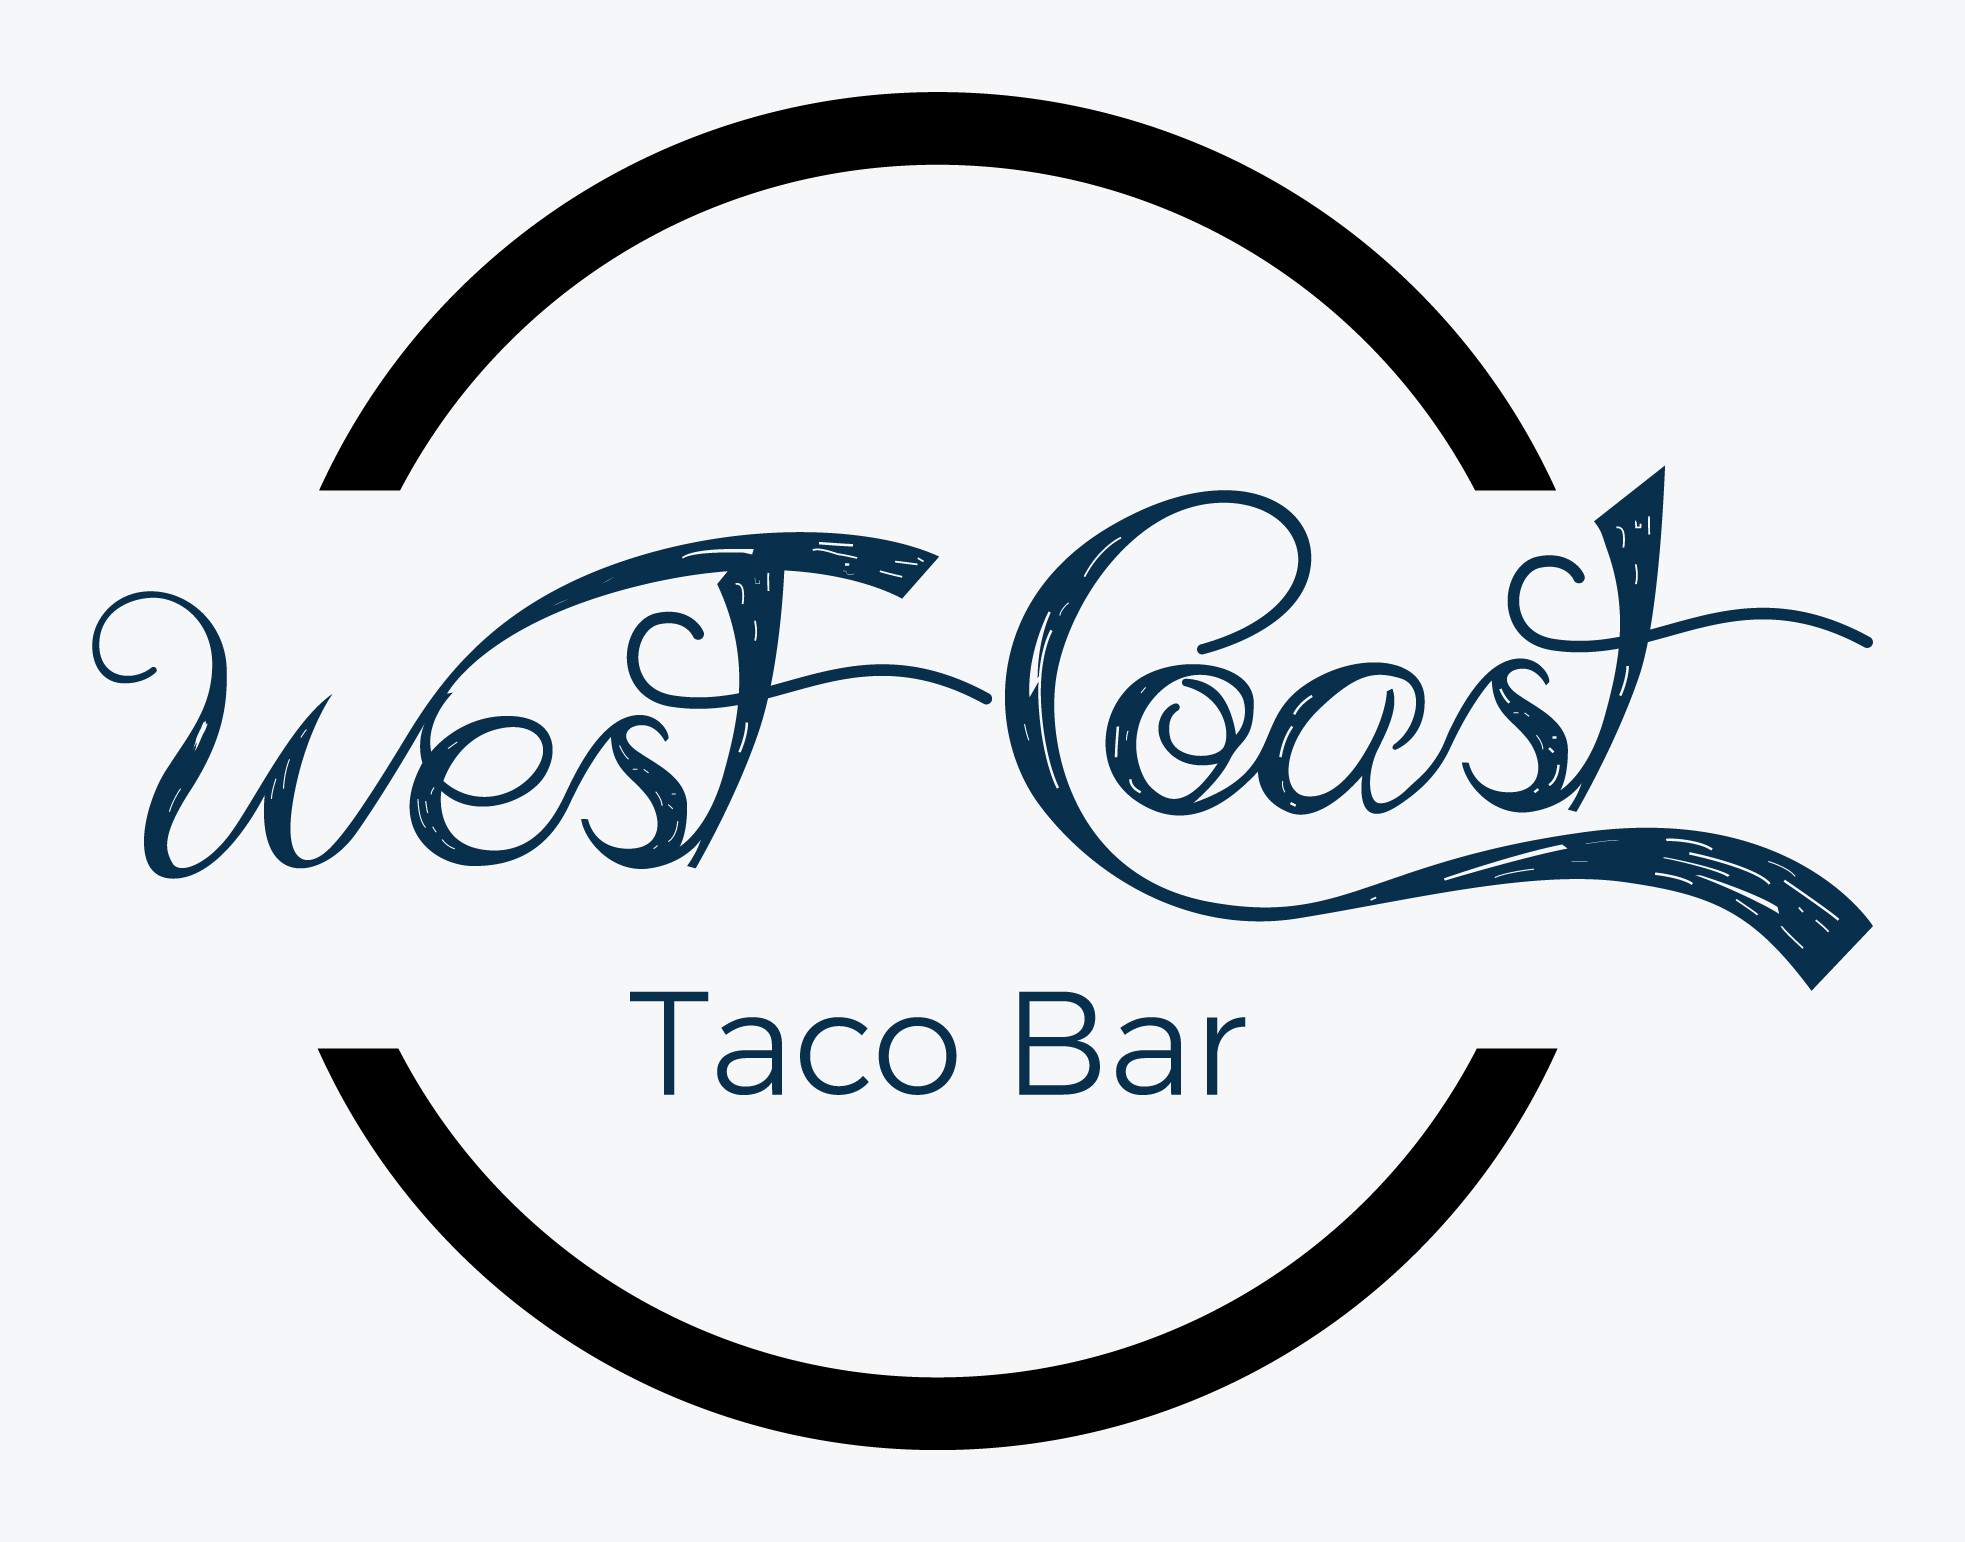 West Coast Taco Bar - Food Truck